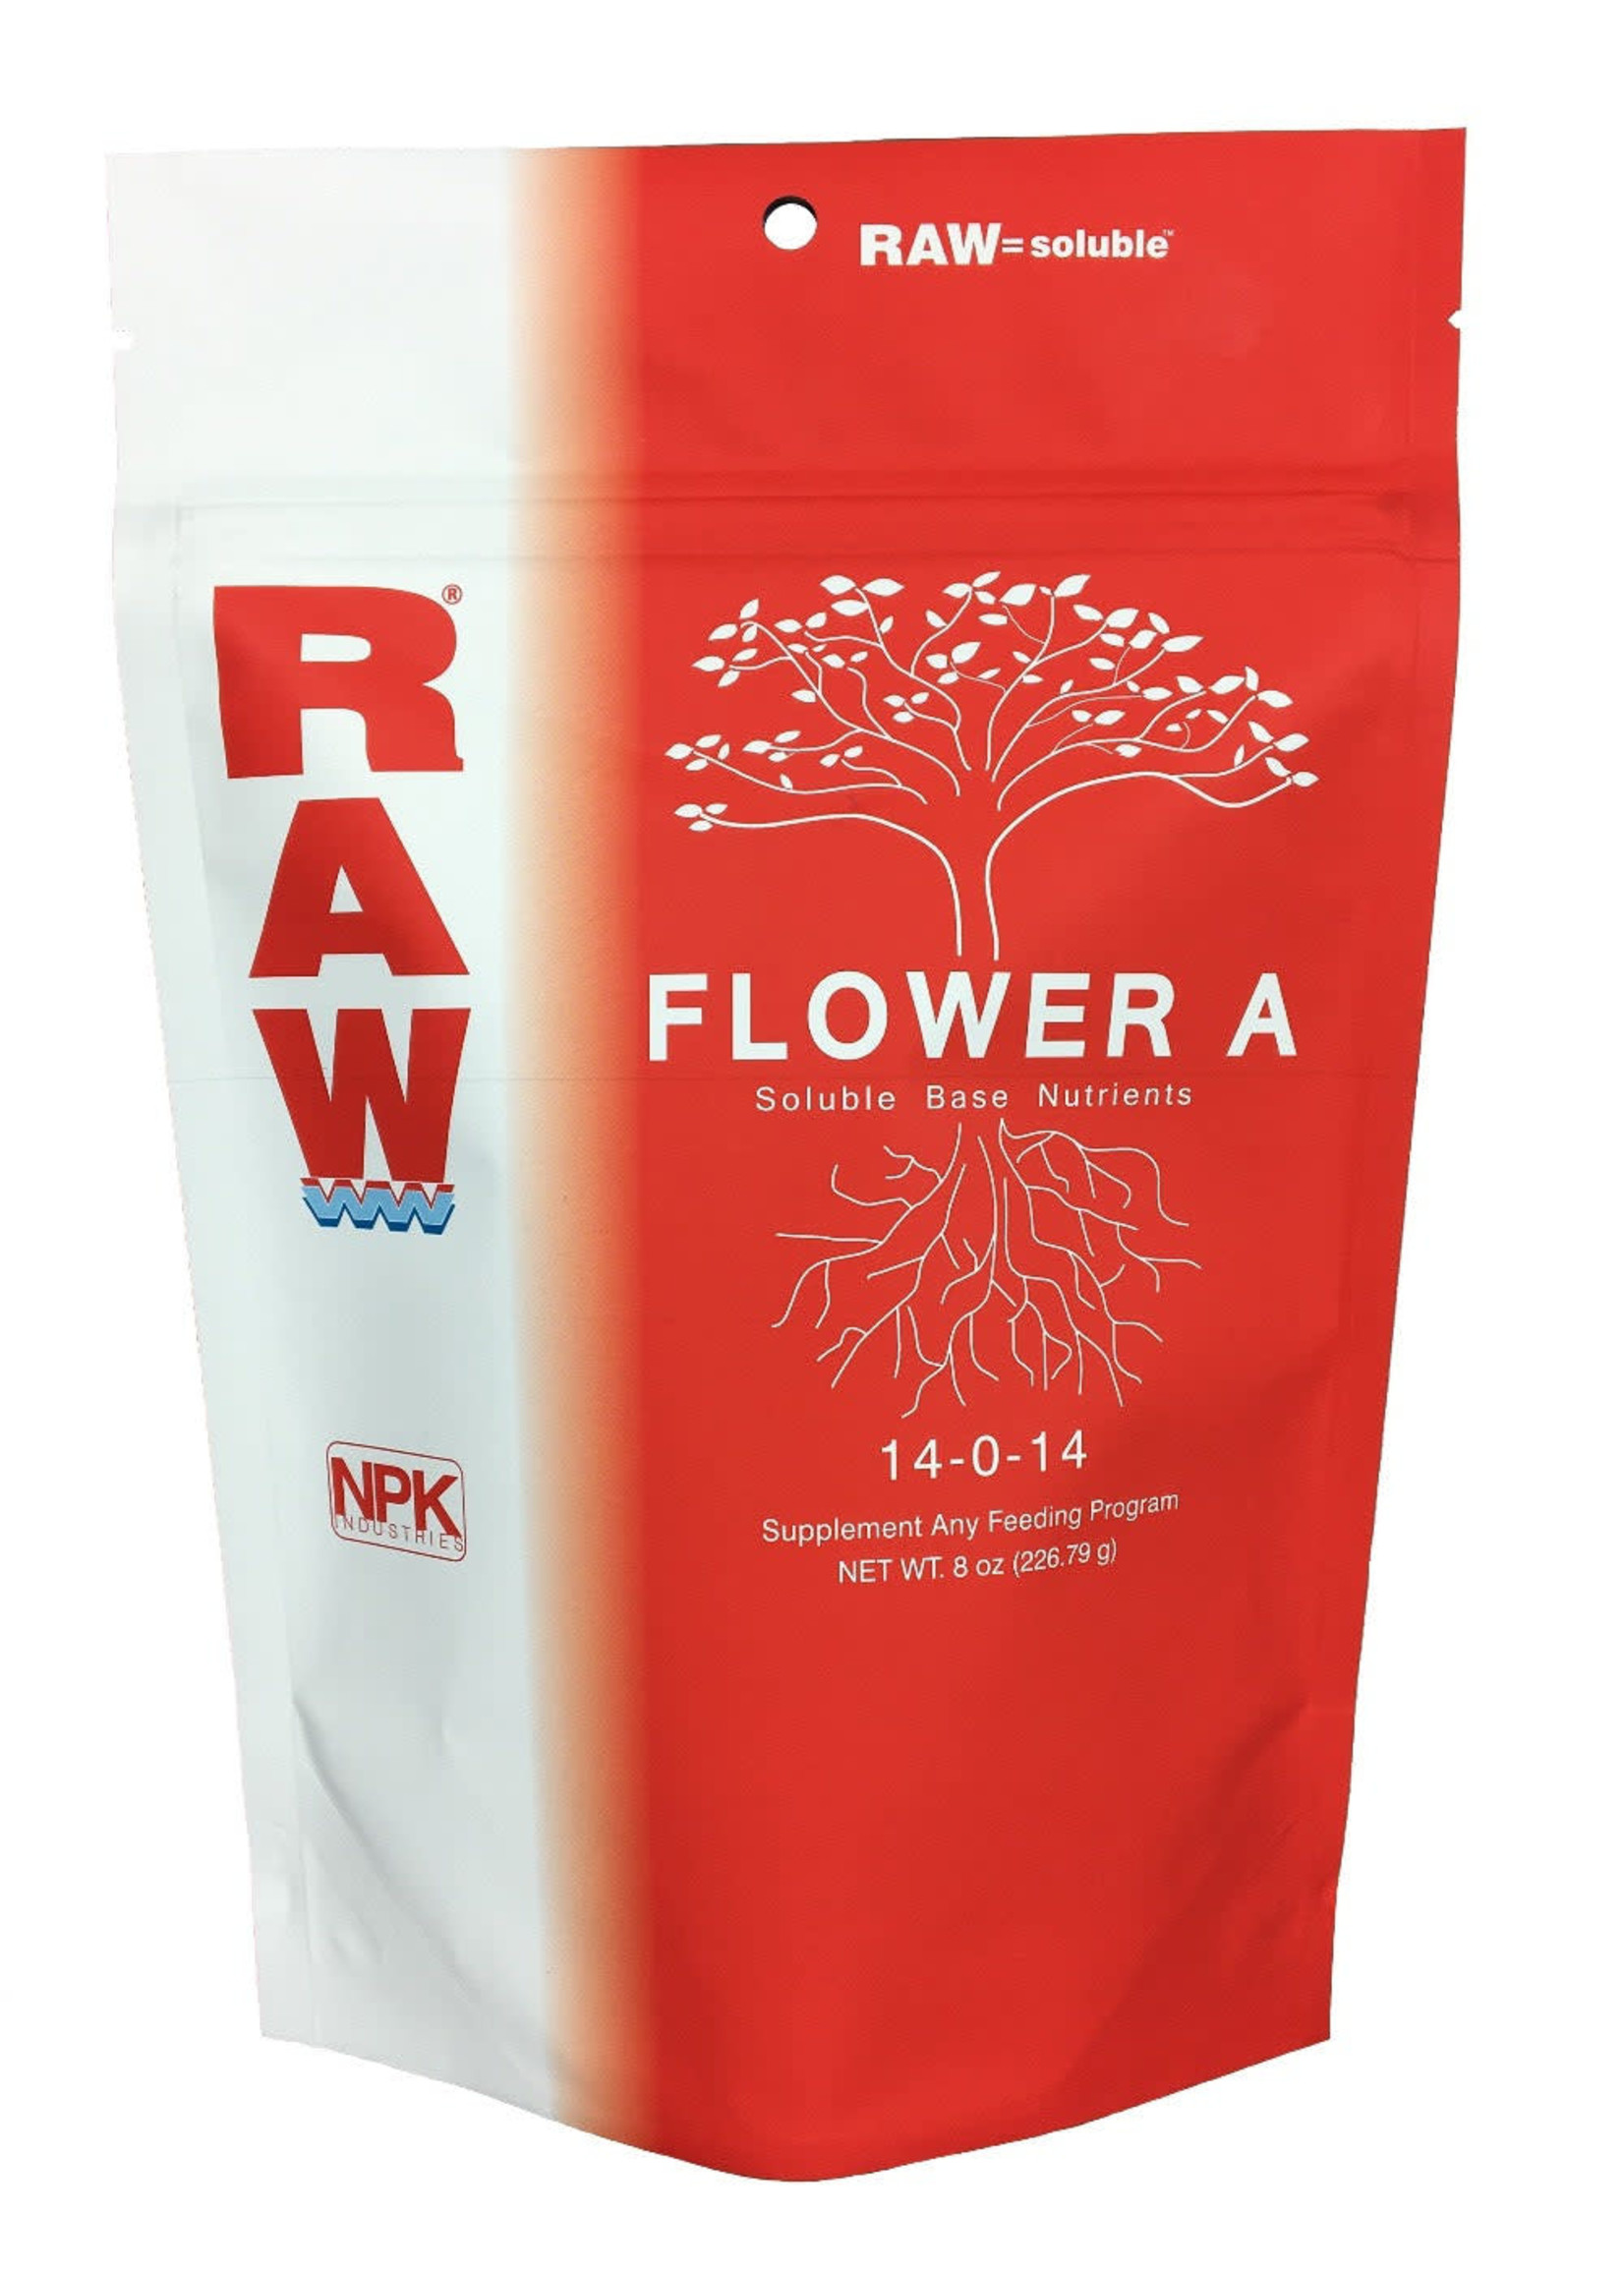 NPK Raw Flower A